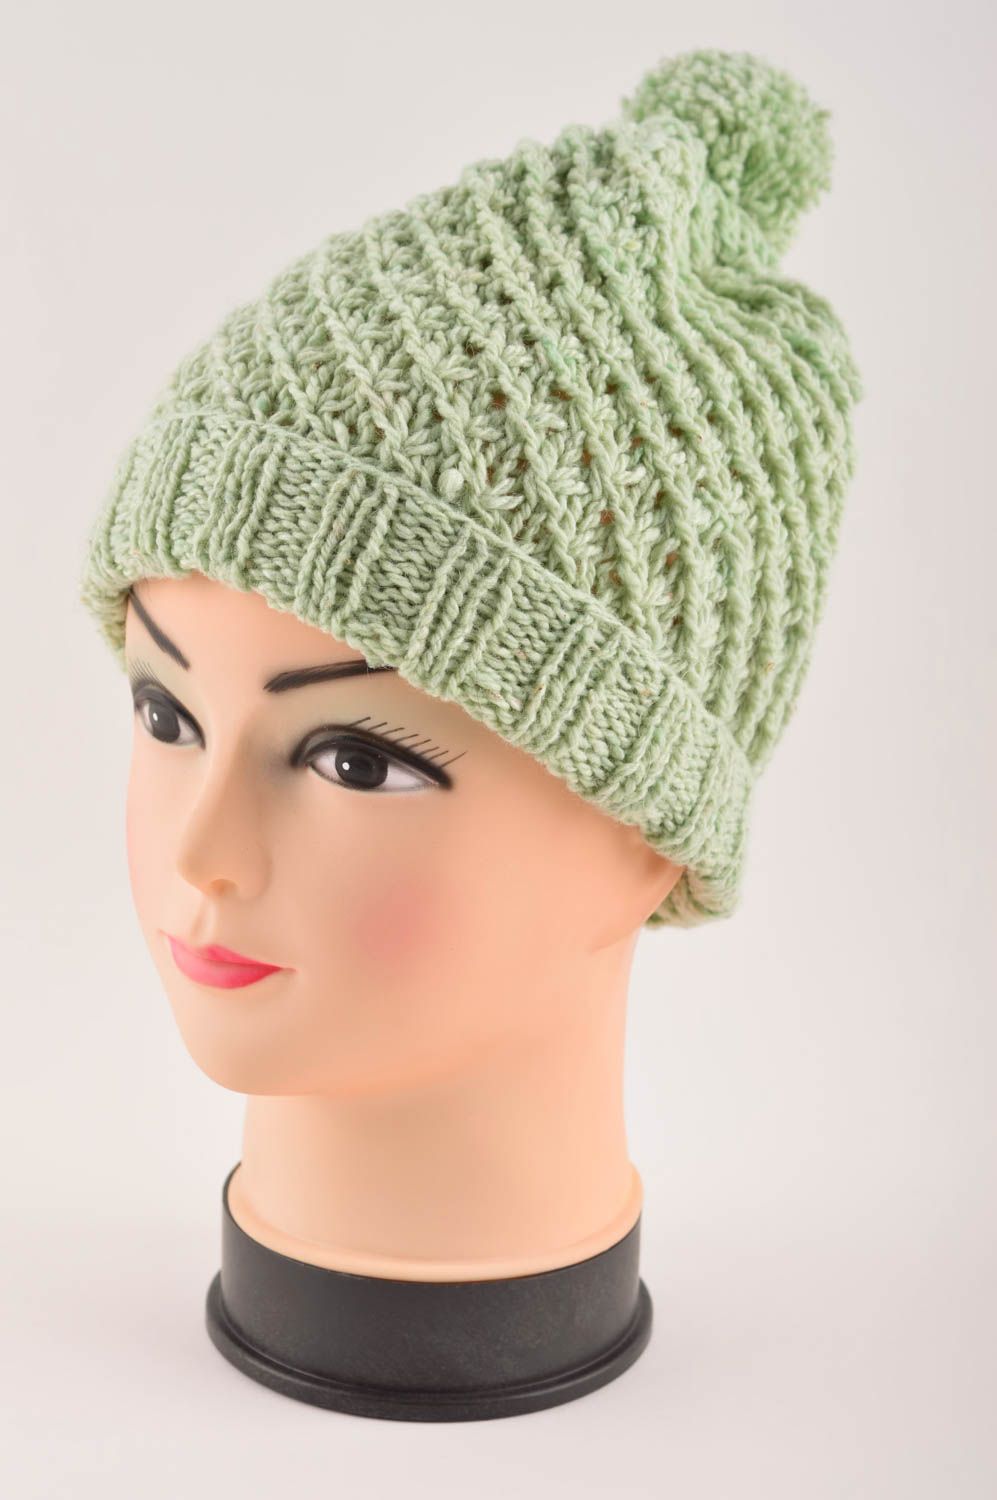 Handmade hat crocheted warm hat for winter unusual hat designer hat for girls photo 2